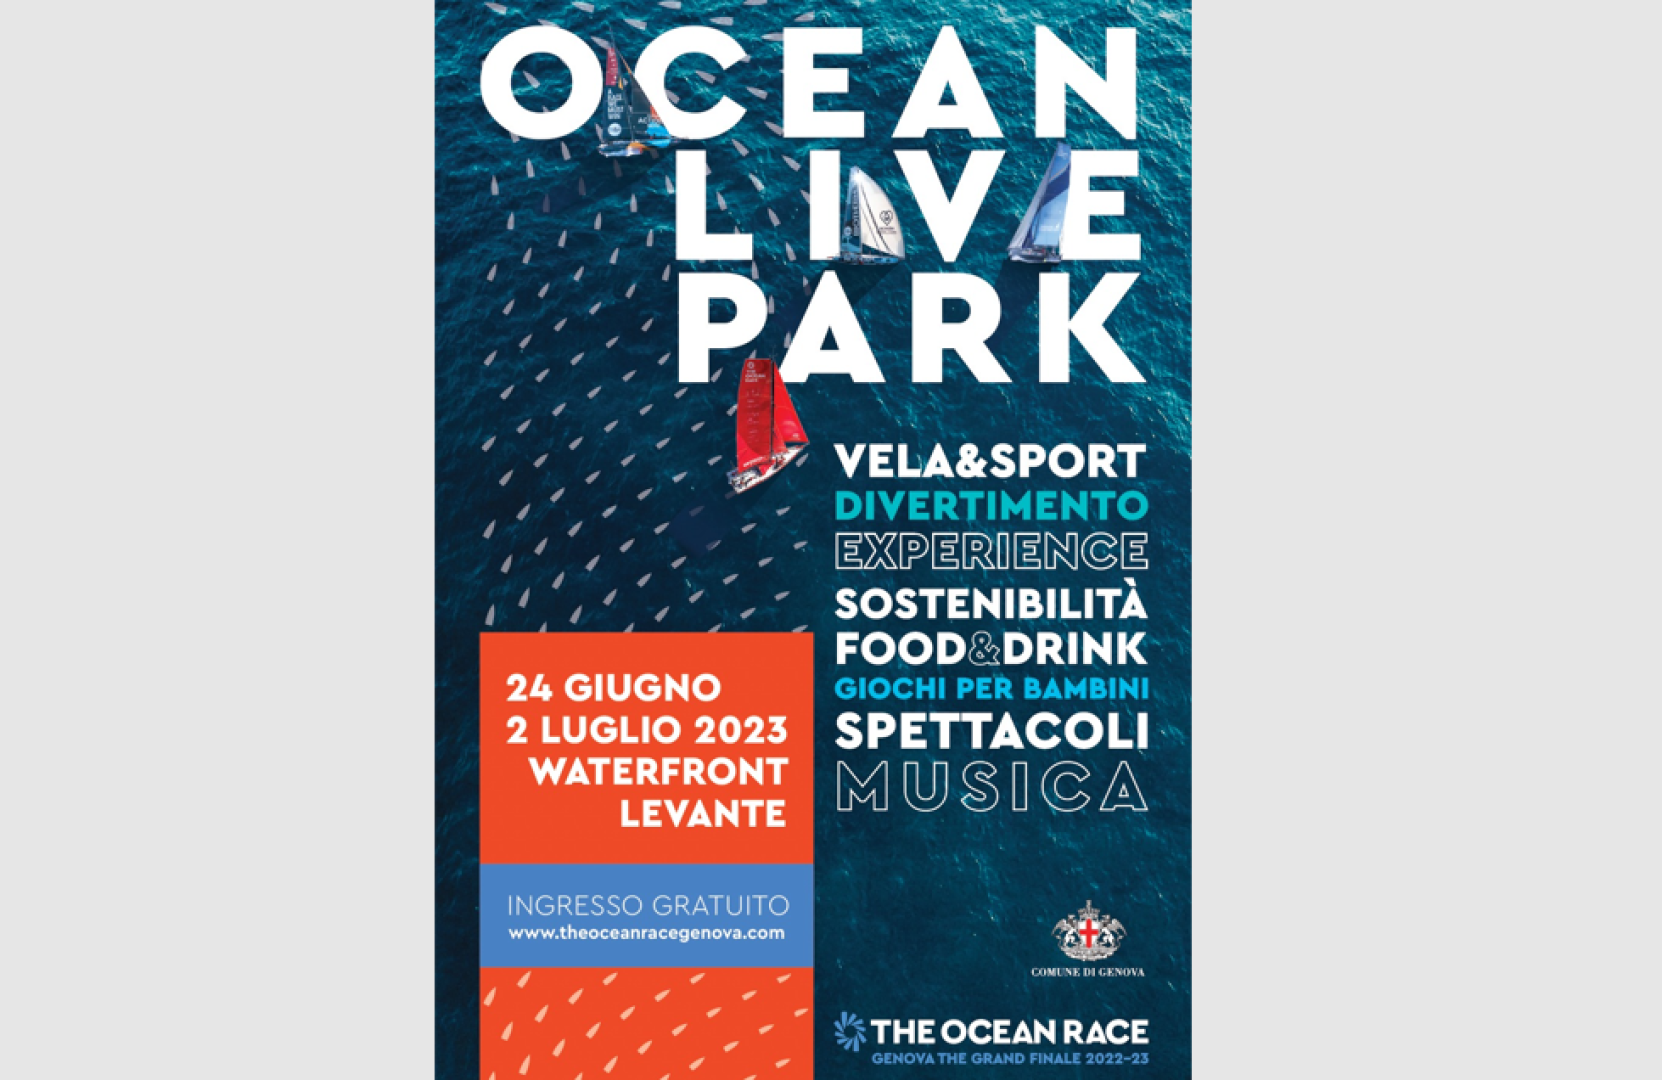 The Ocean Race Genova Ocean Live Park